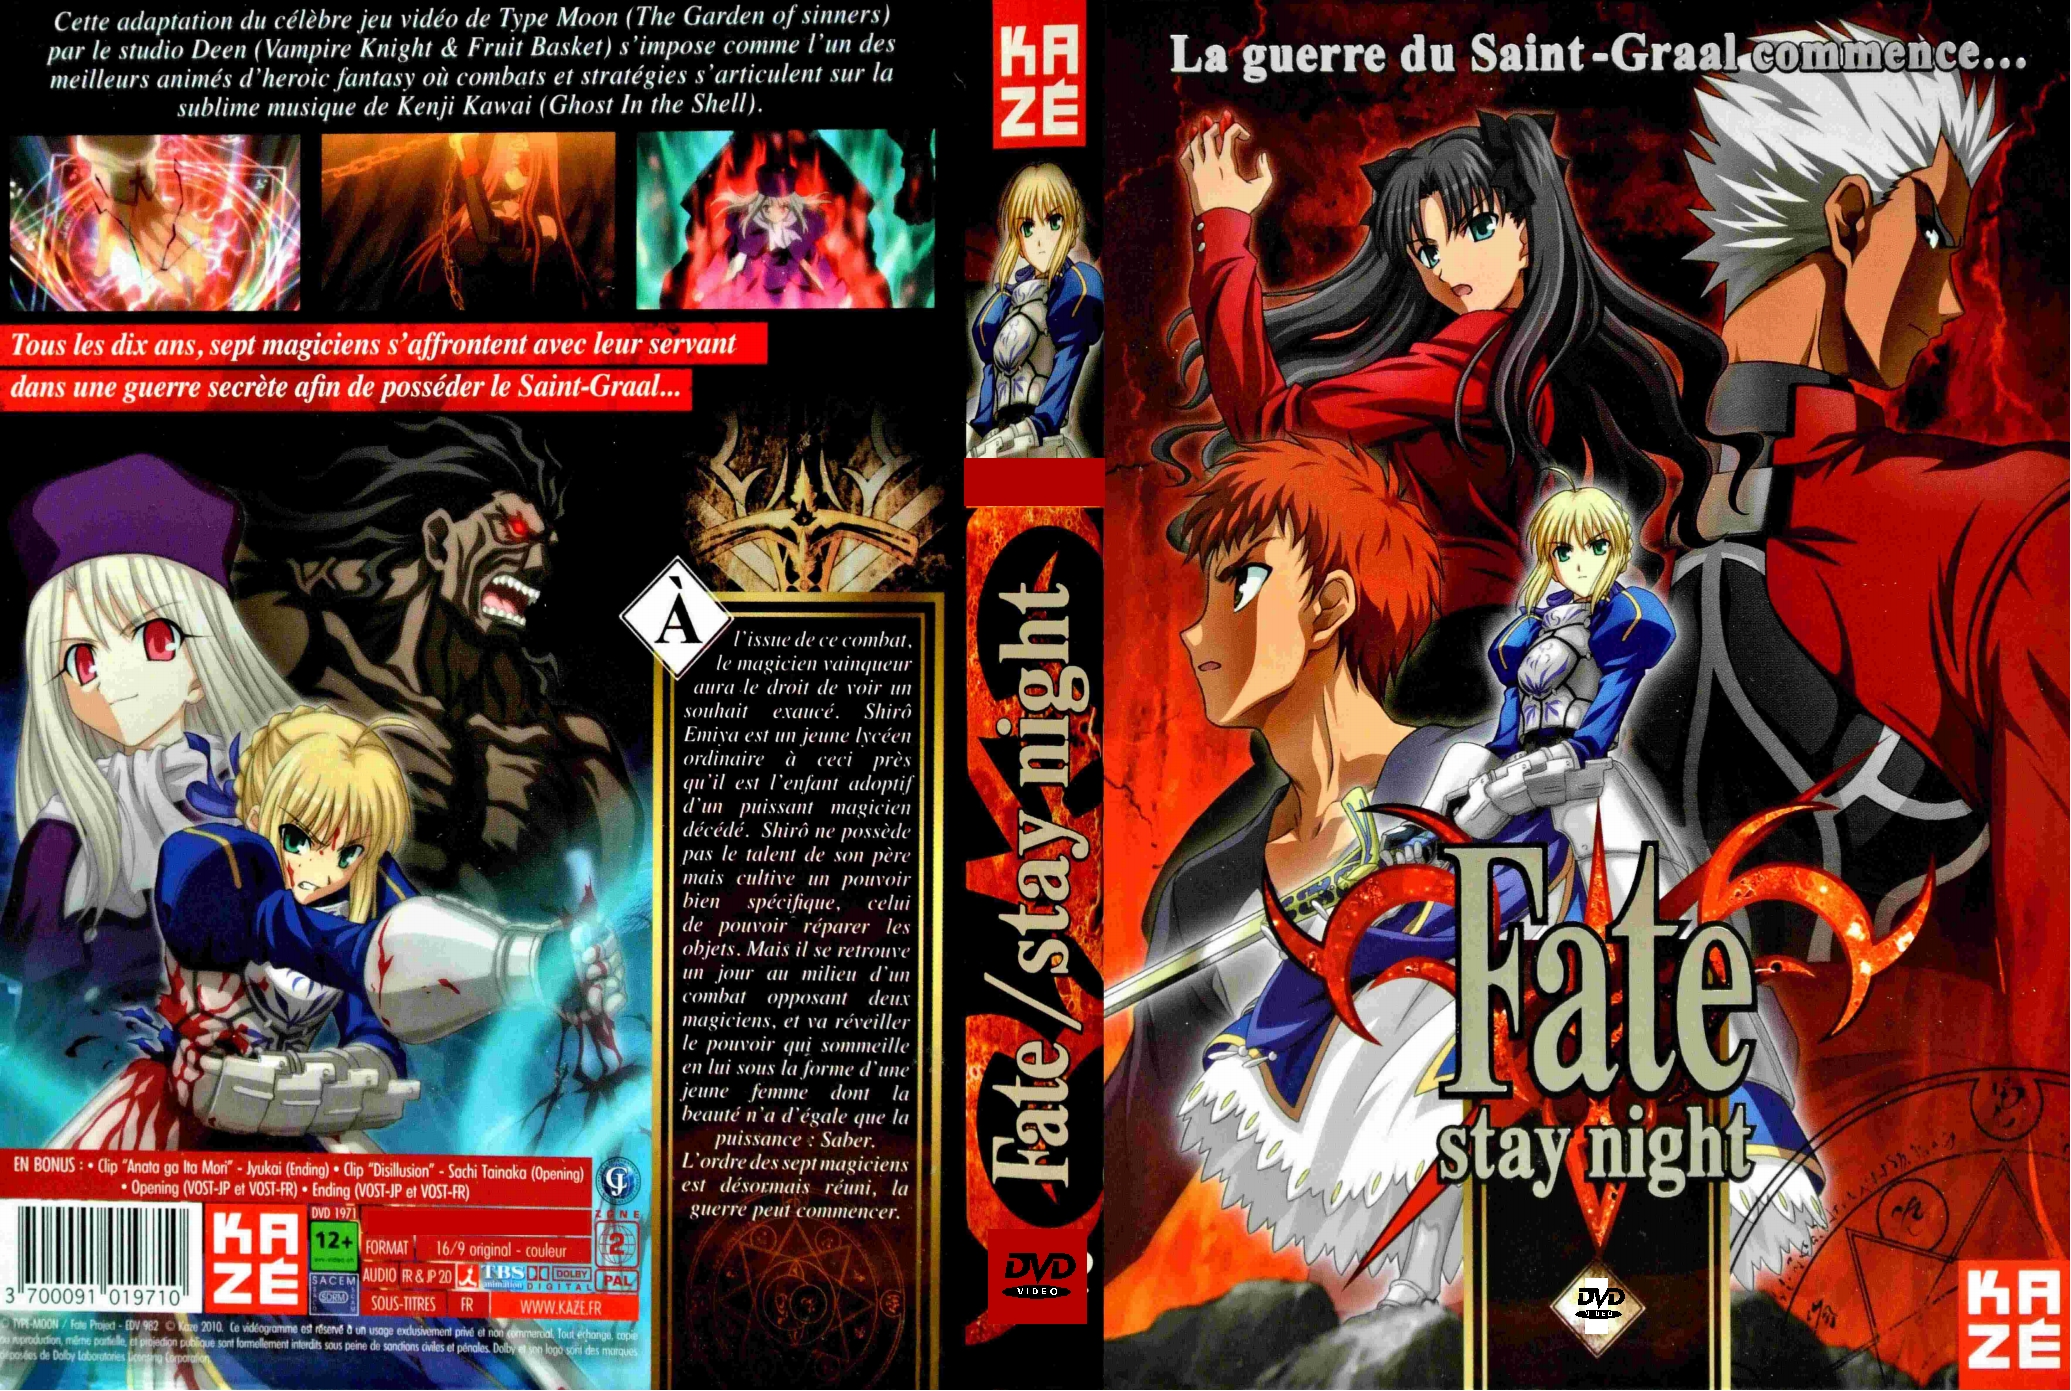 Jaquette DVD Fate stay night custom